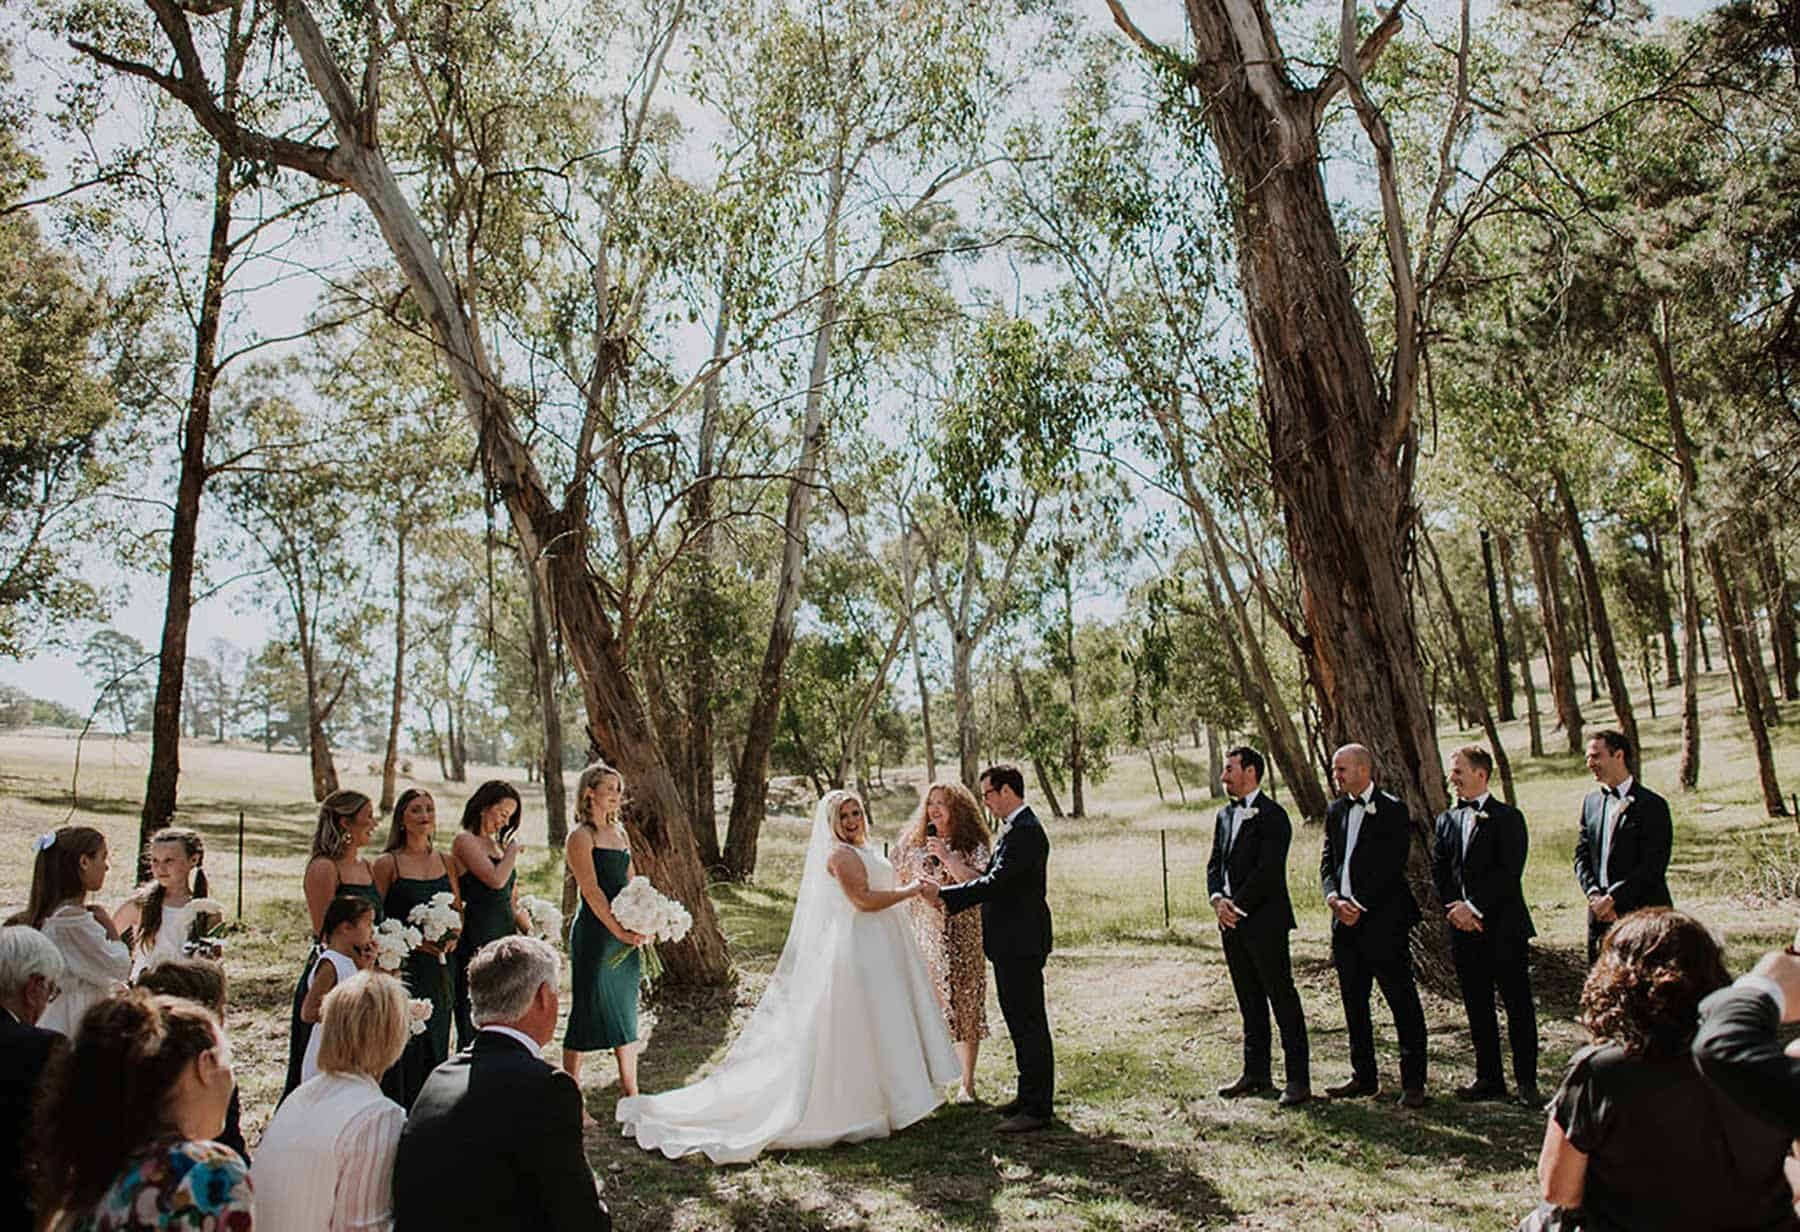 Precious Celebrations - modern Melbourne wedding celebrant